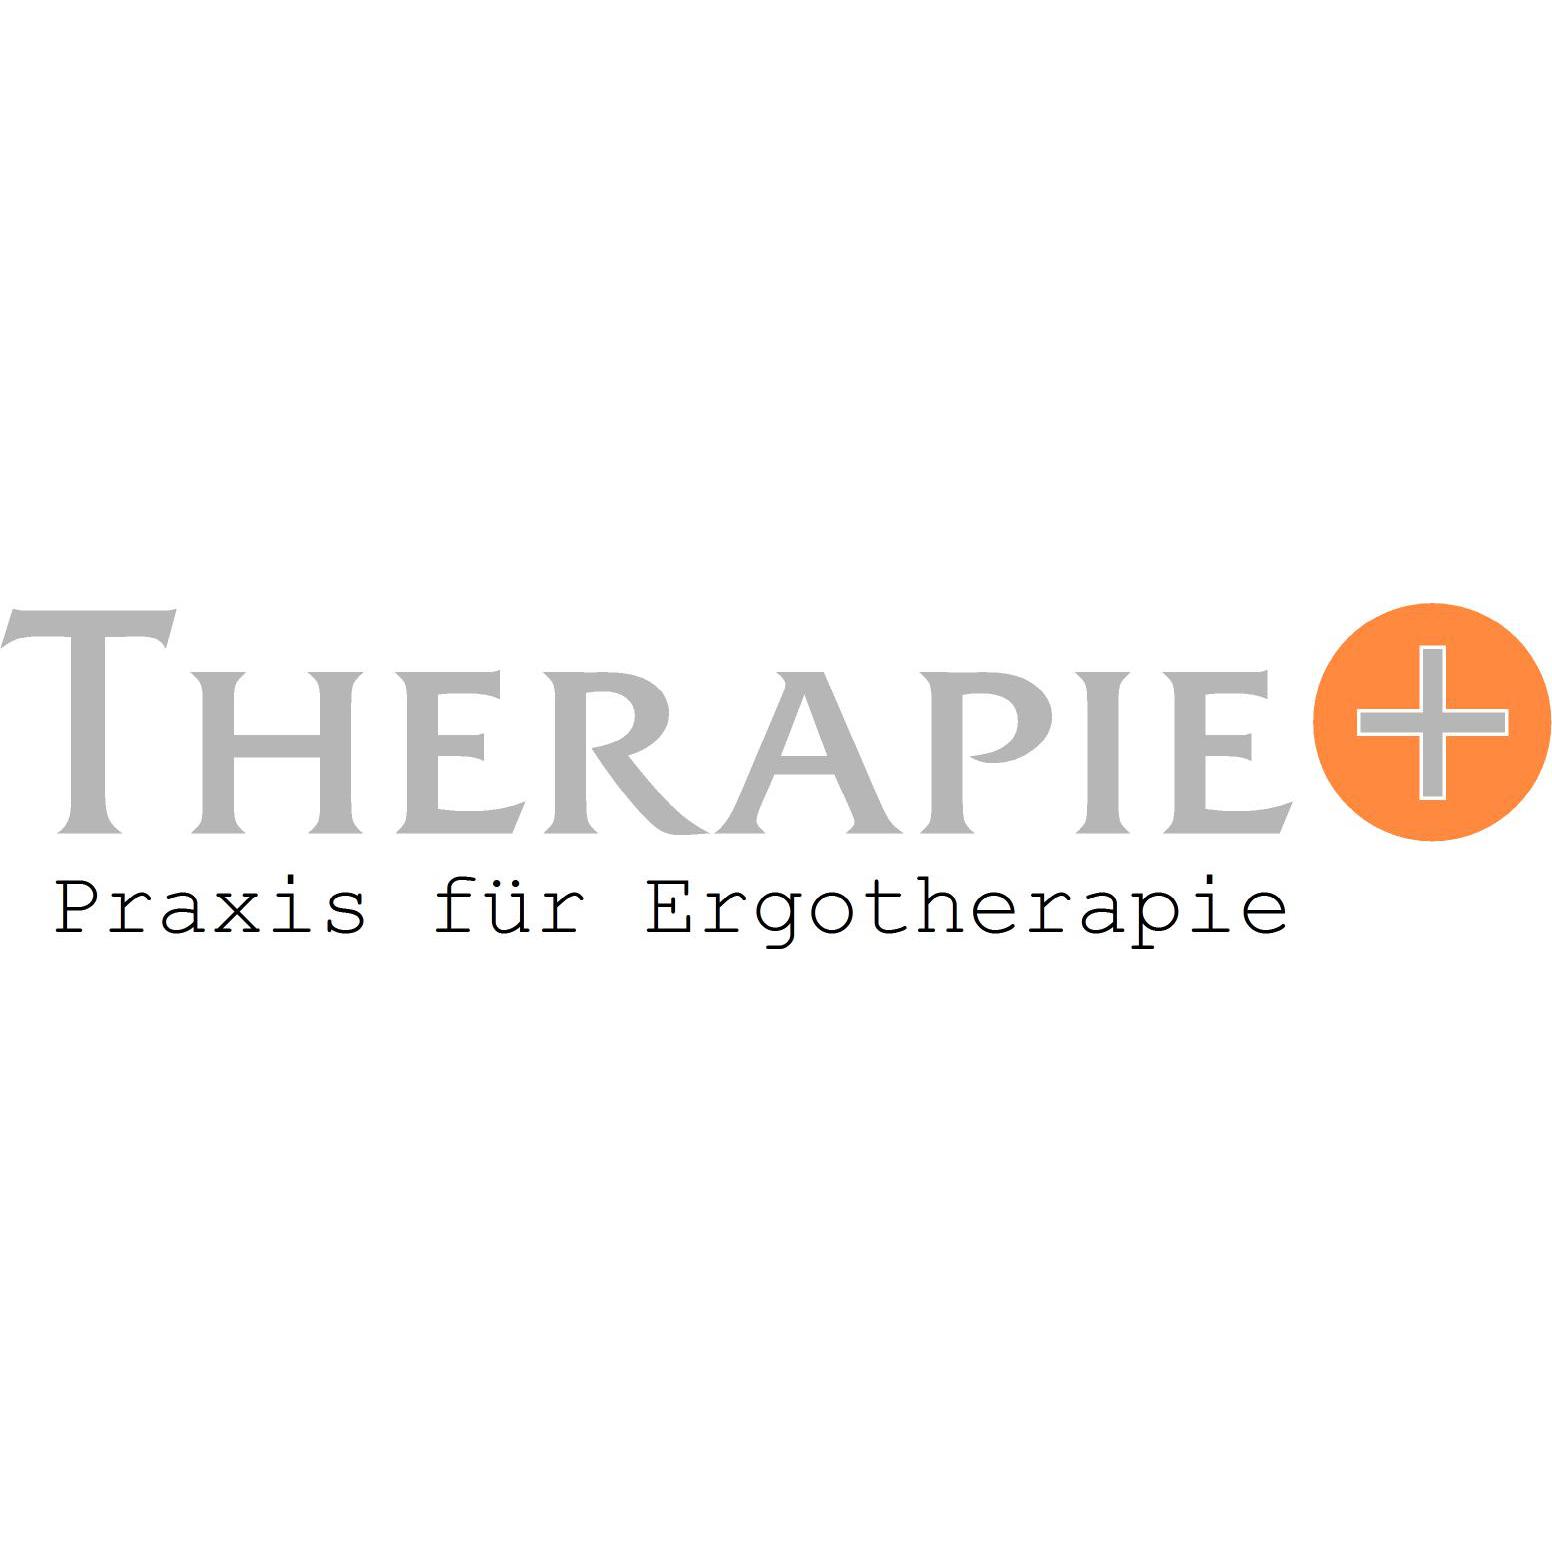 Logo von Therapie Plus